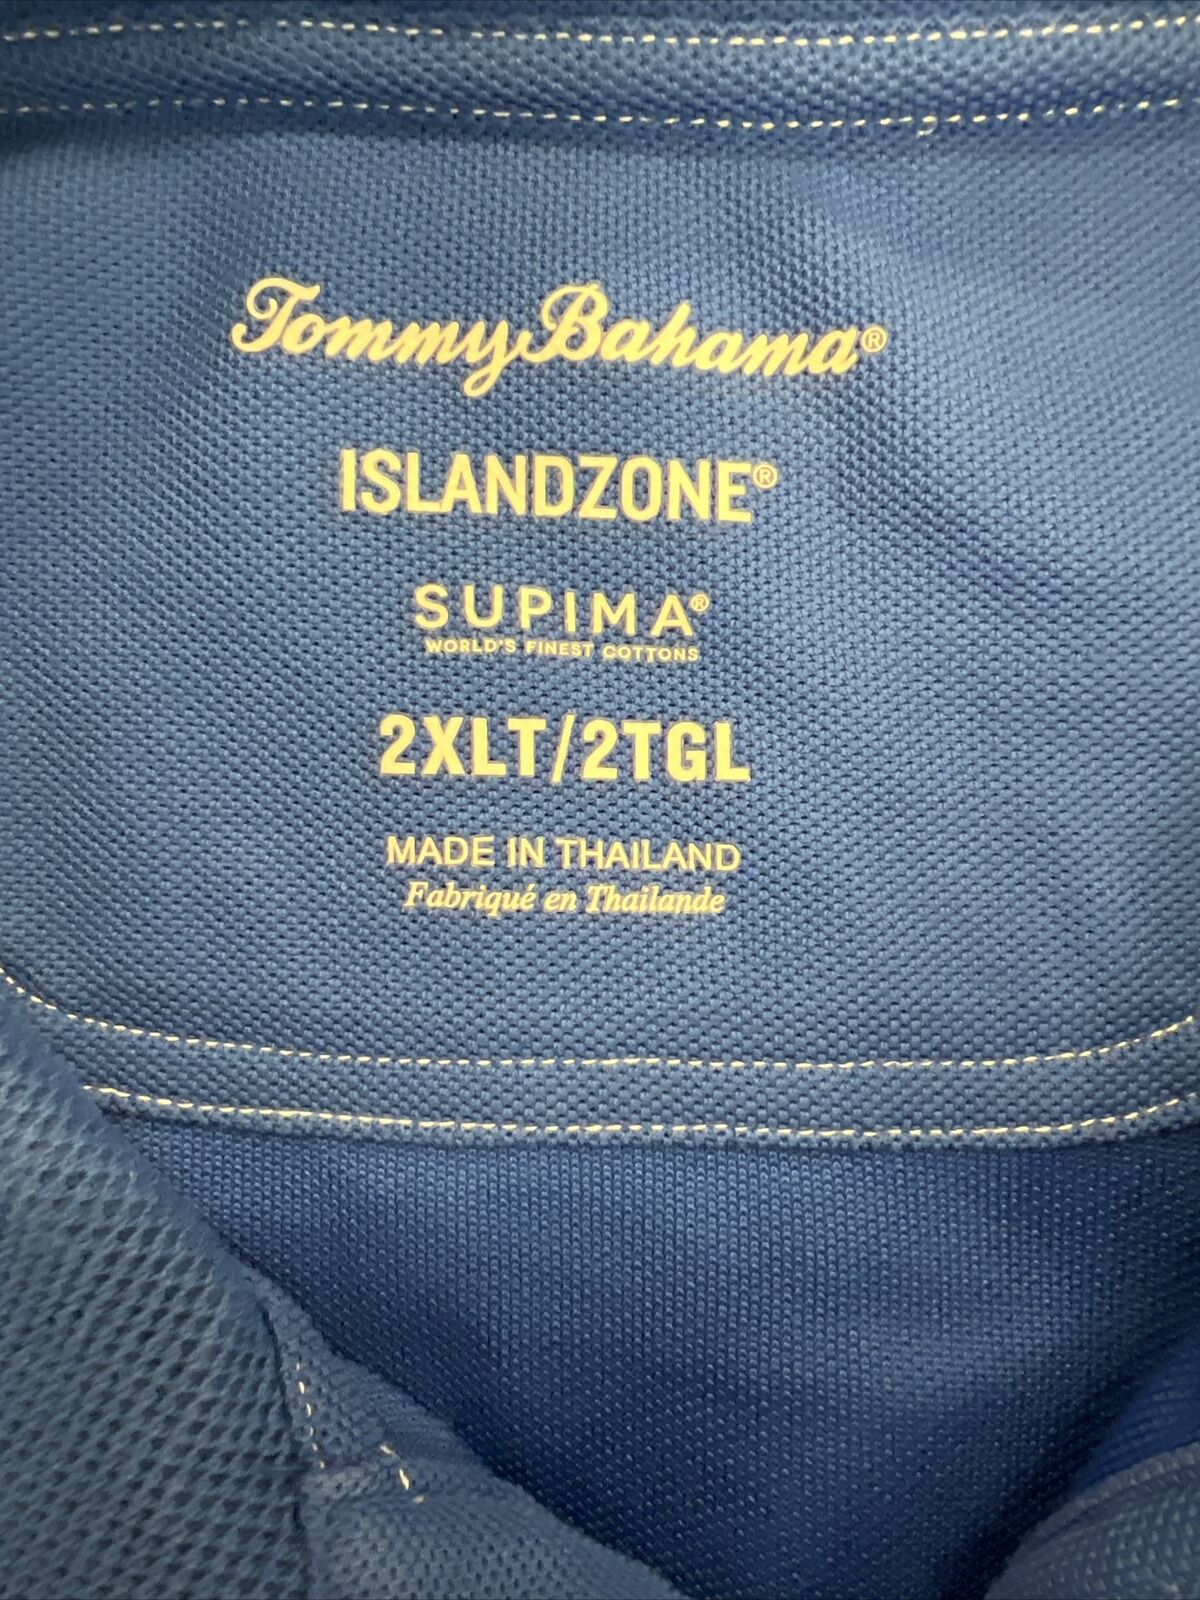 Tommy Bahama Men's Blue Island Zone Supima Cotton Polo - Tall 2XLT